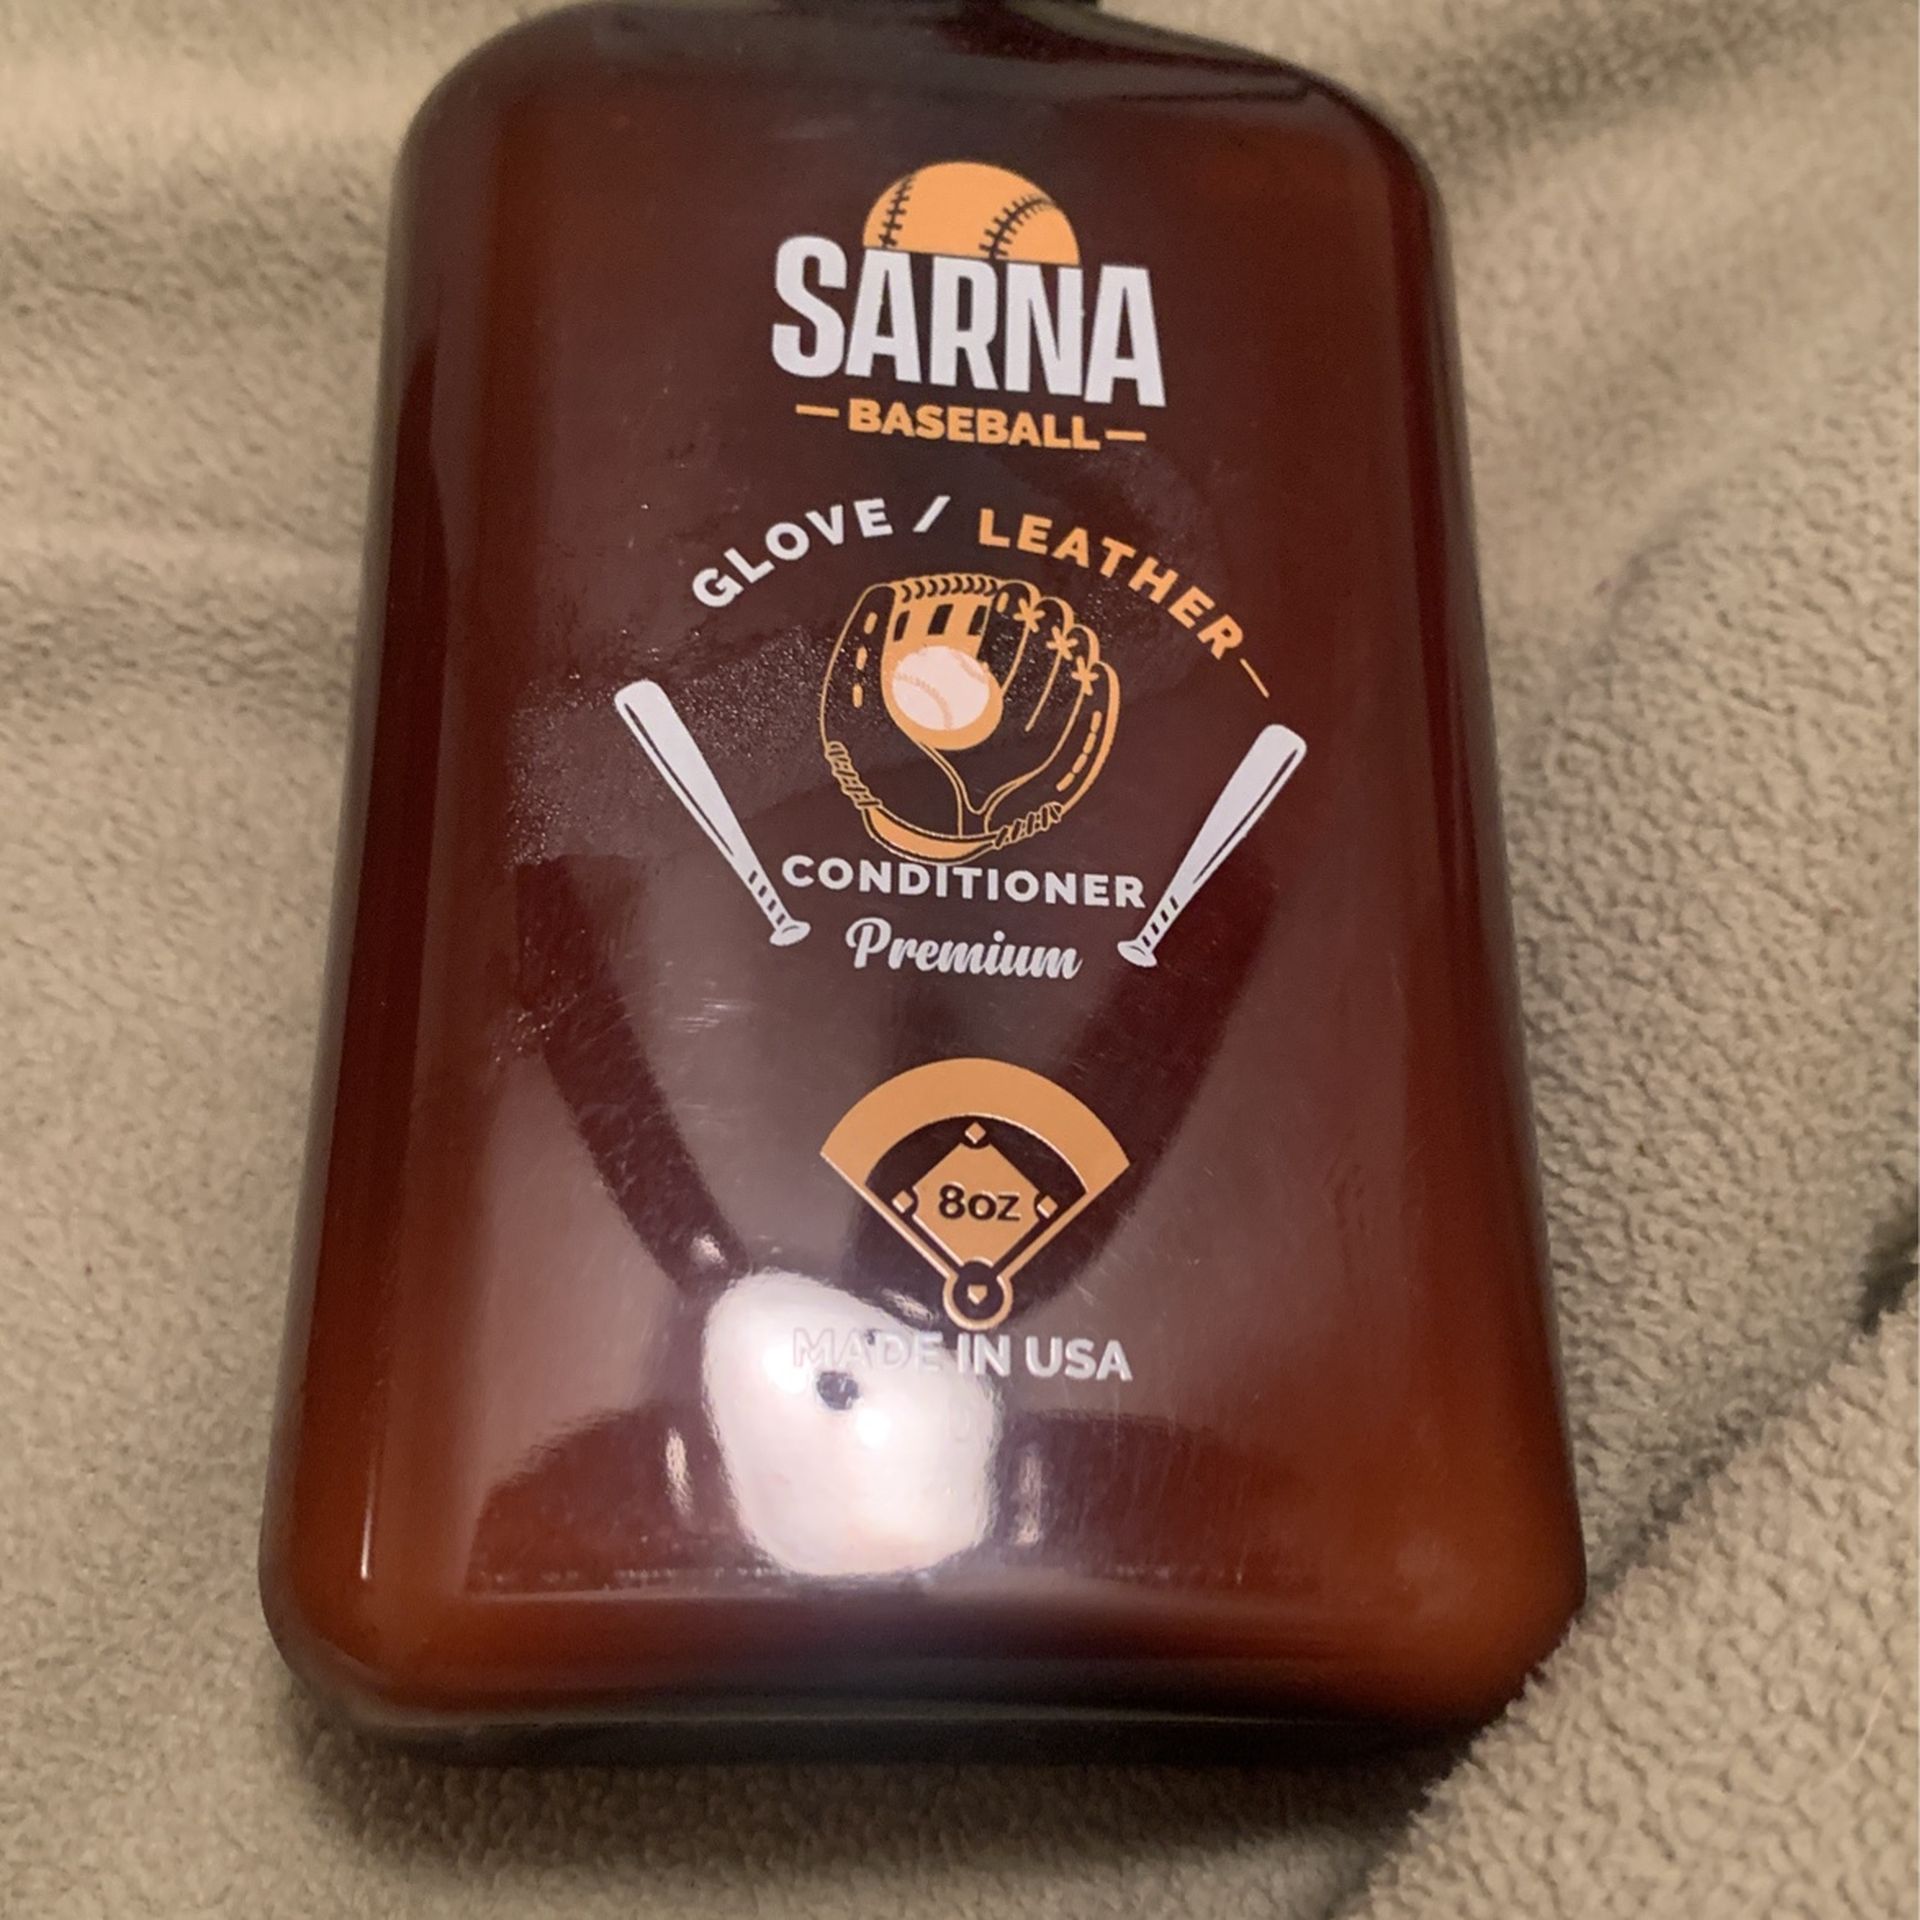 Sarna Baseball glove/Leather conditioner 